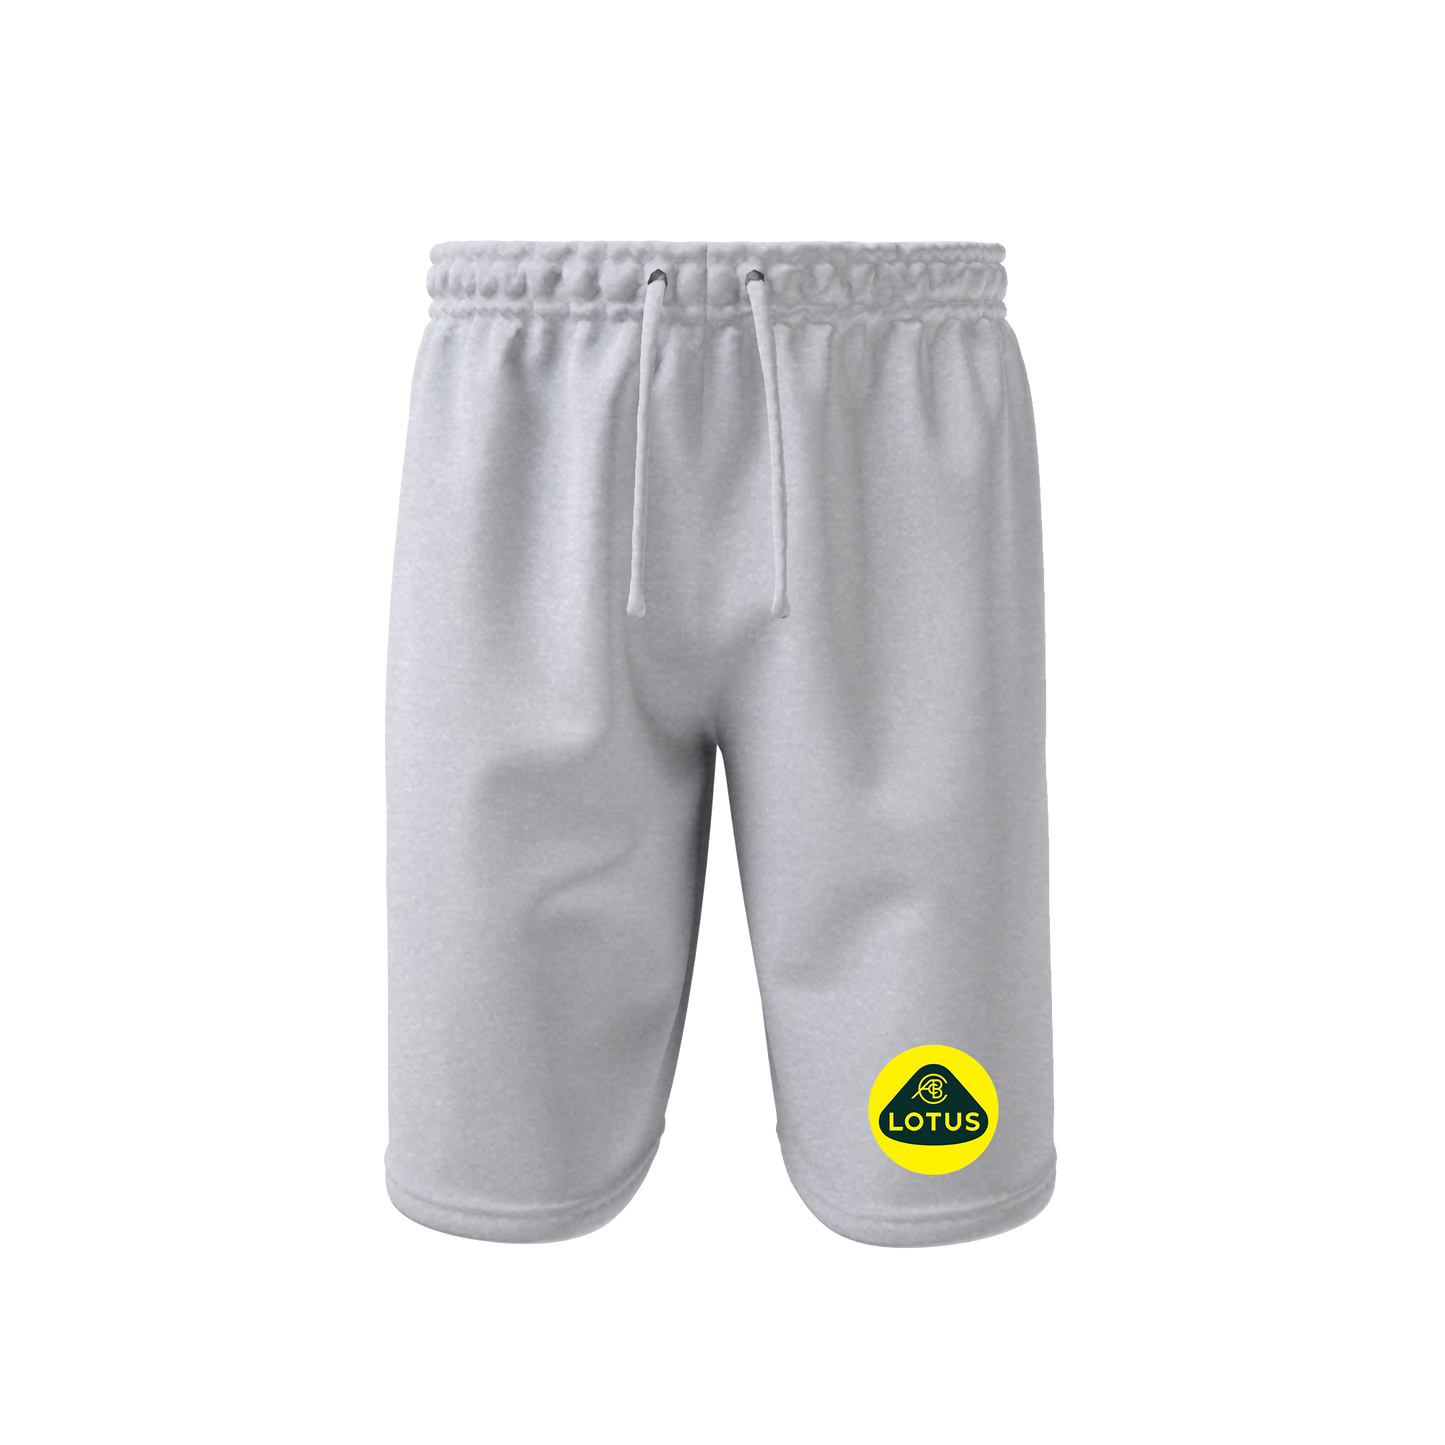 Men’s Lotus Car Athletic Fleece Shorts